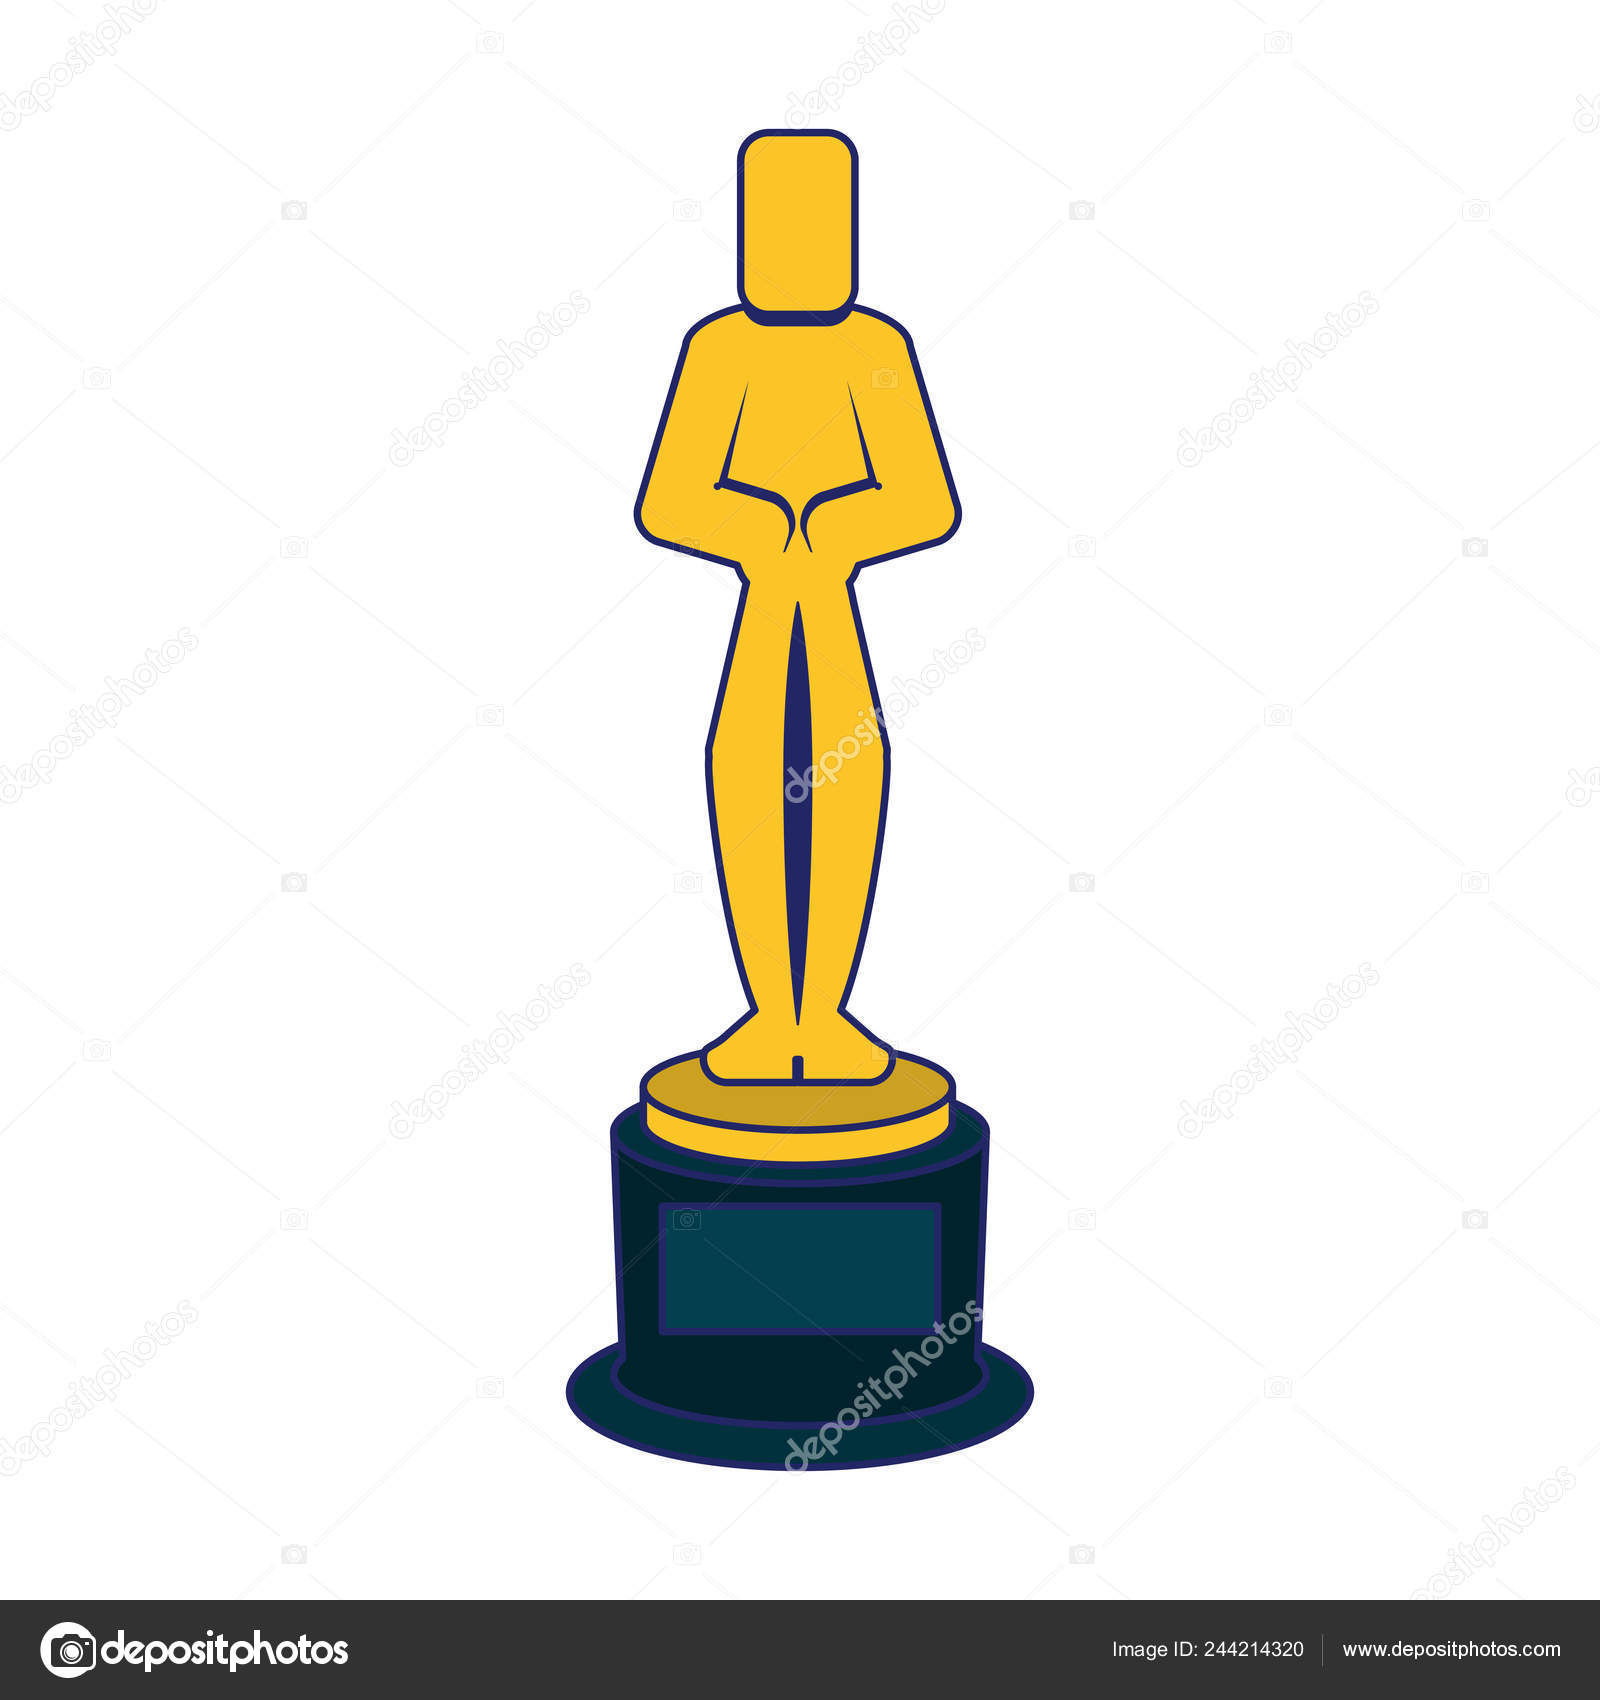 https://st4.depositphotos.com/5934840/24421/v/1600/depositphotos_244214320-stock-illustration-oscar-award-trophy.jpg